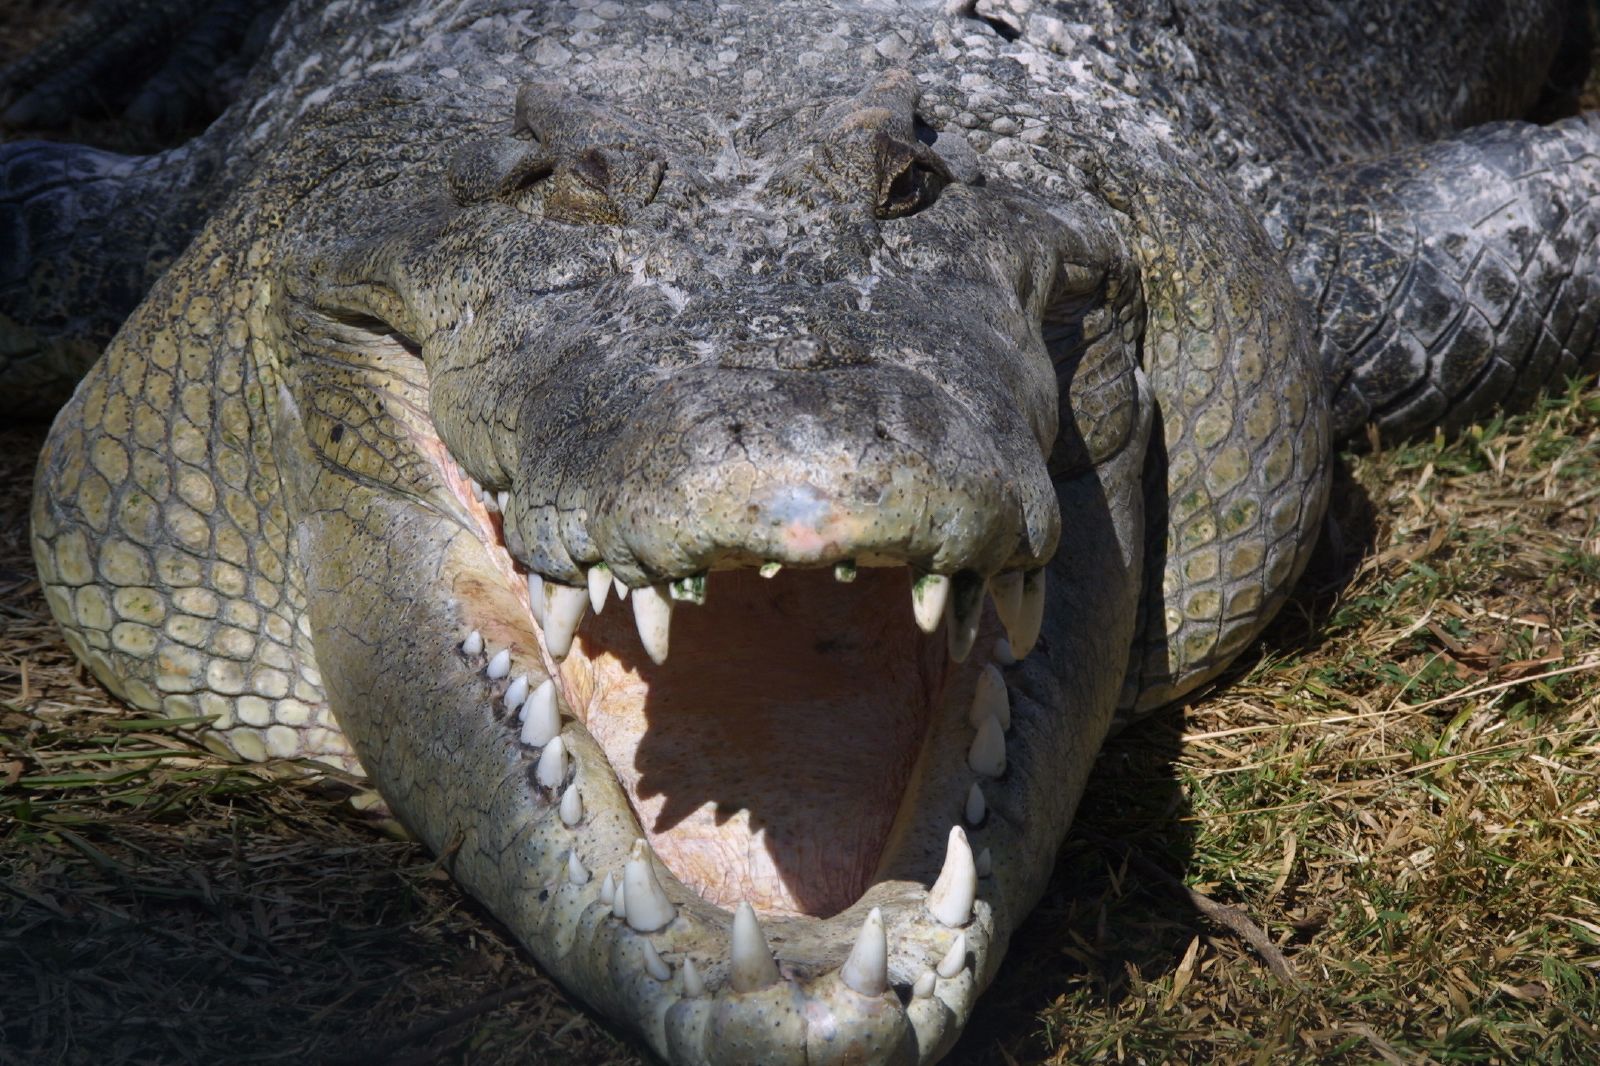 an alligator's head has it's mouth open